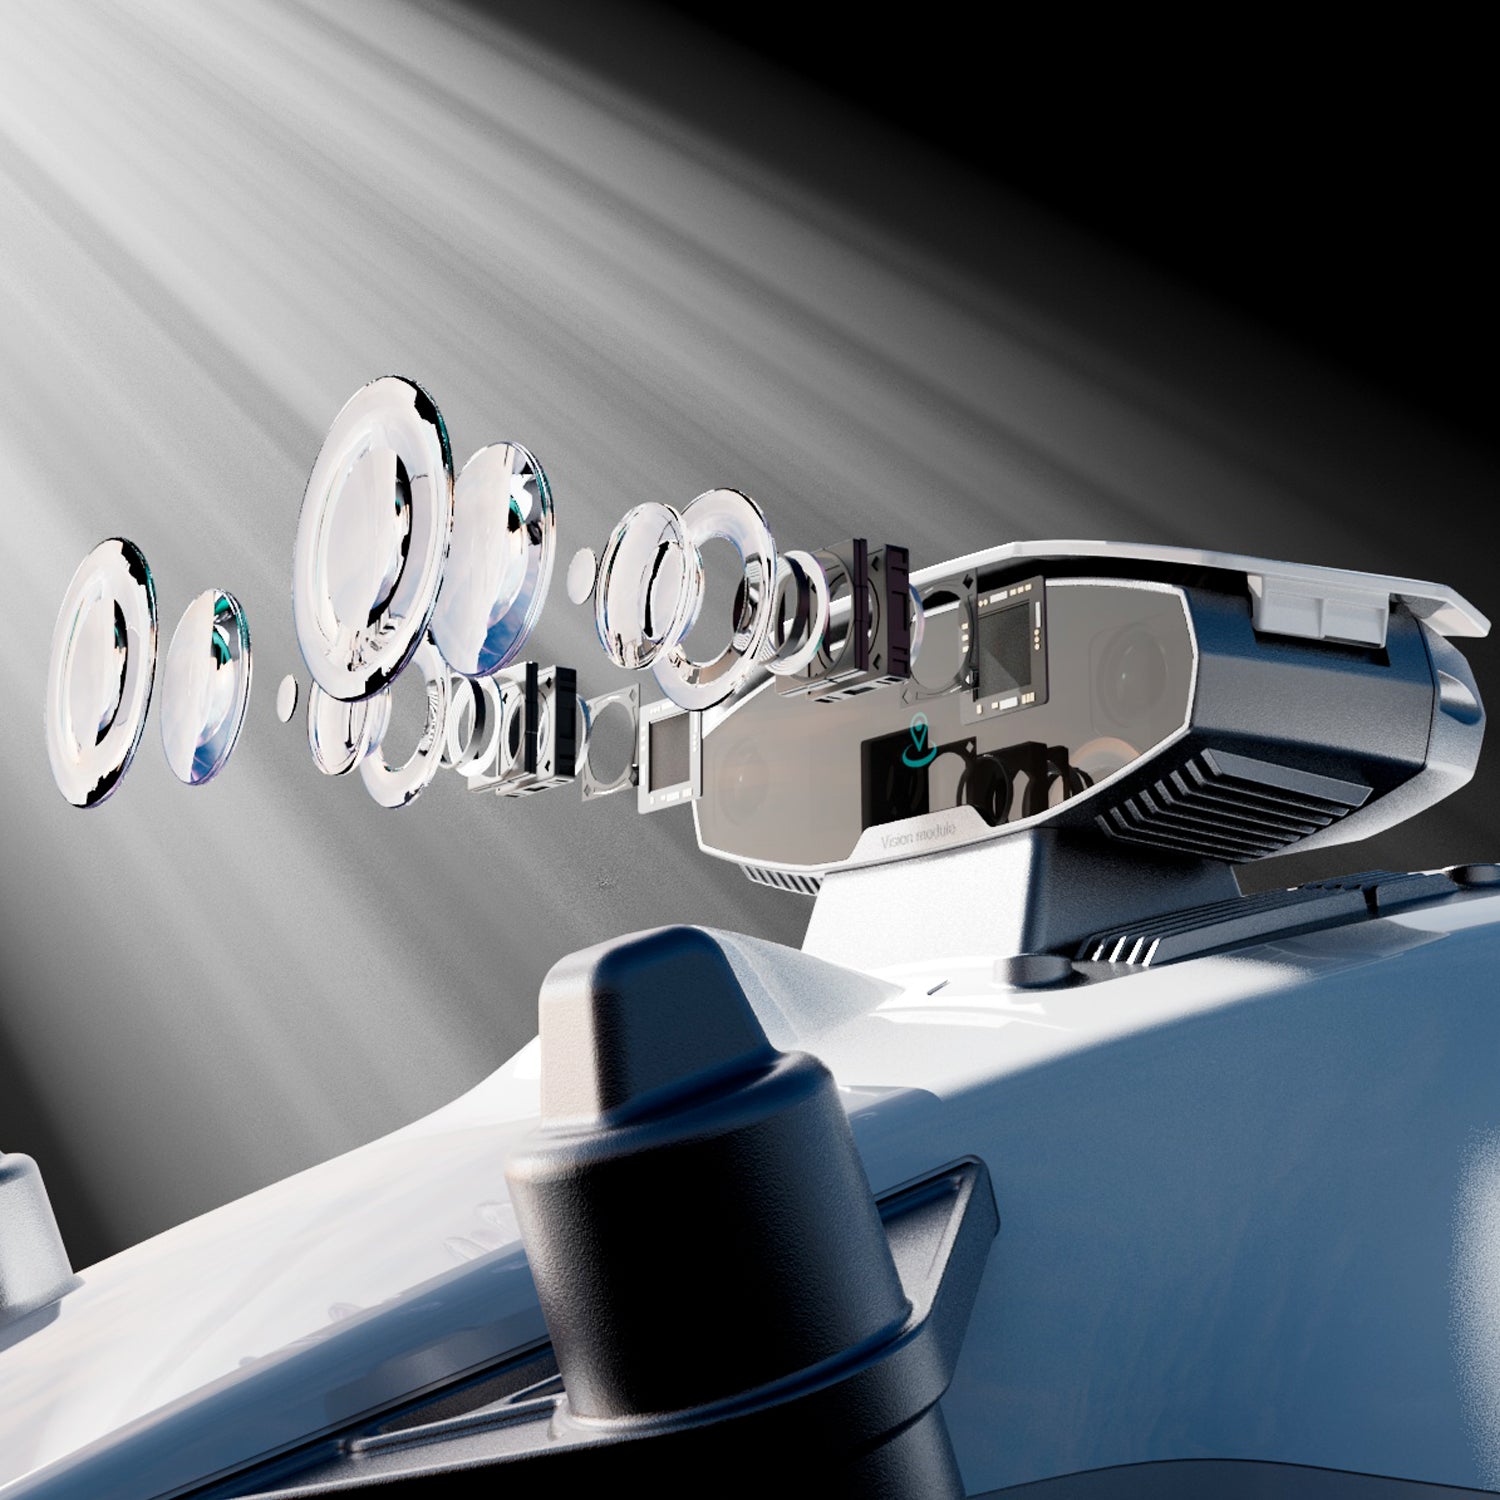 3D Vision rasenmäher roboter - mammotion luba 2 awd